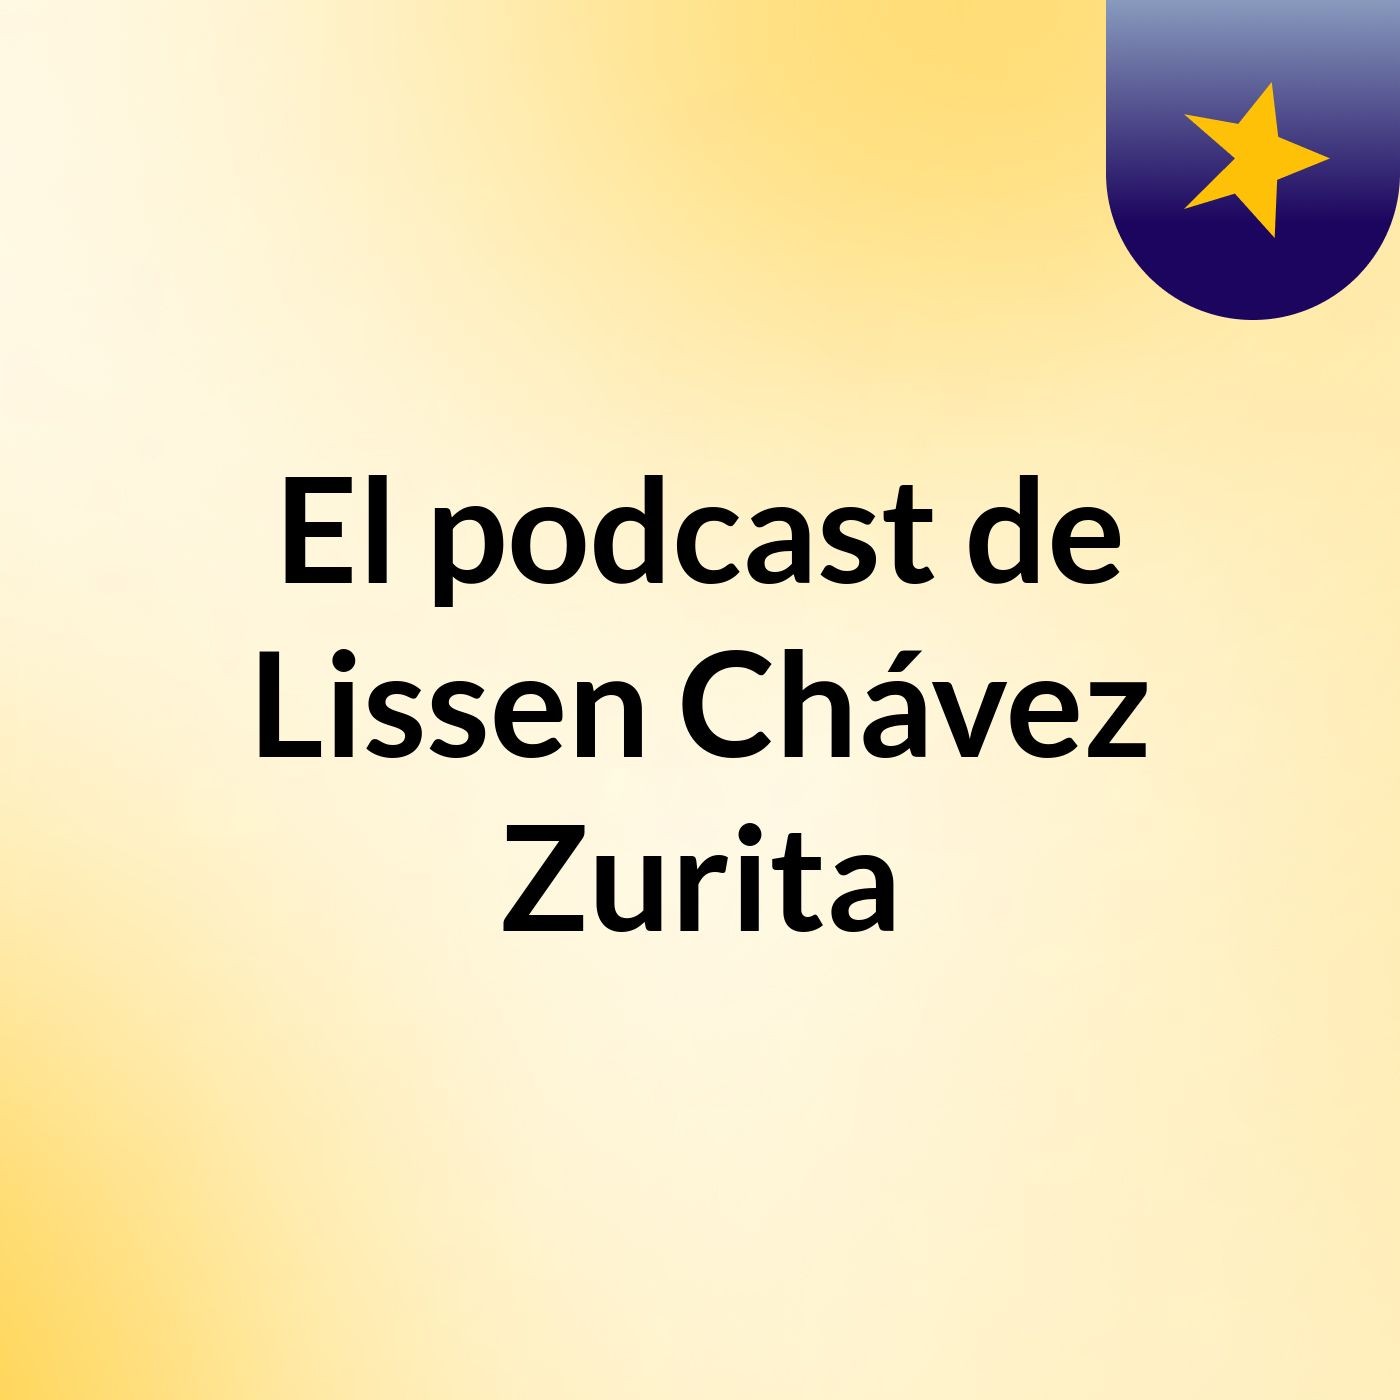 El podcast de Lissen Chávez Zurita